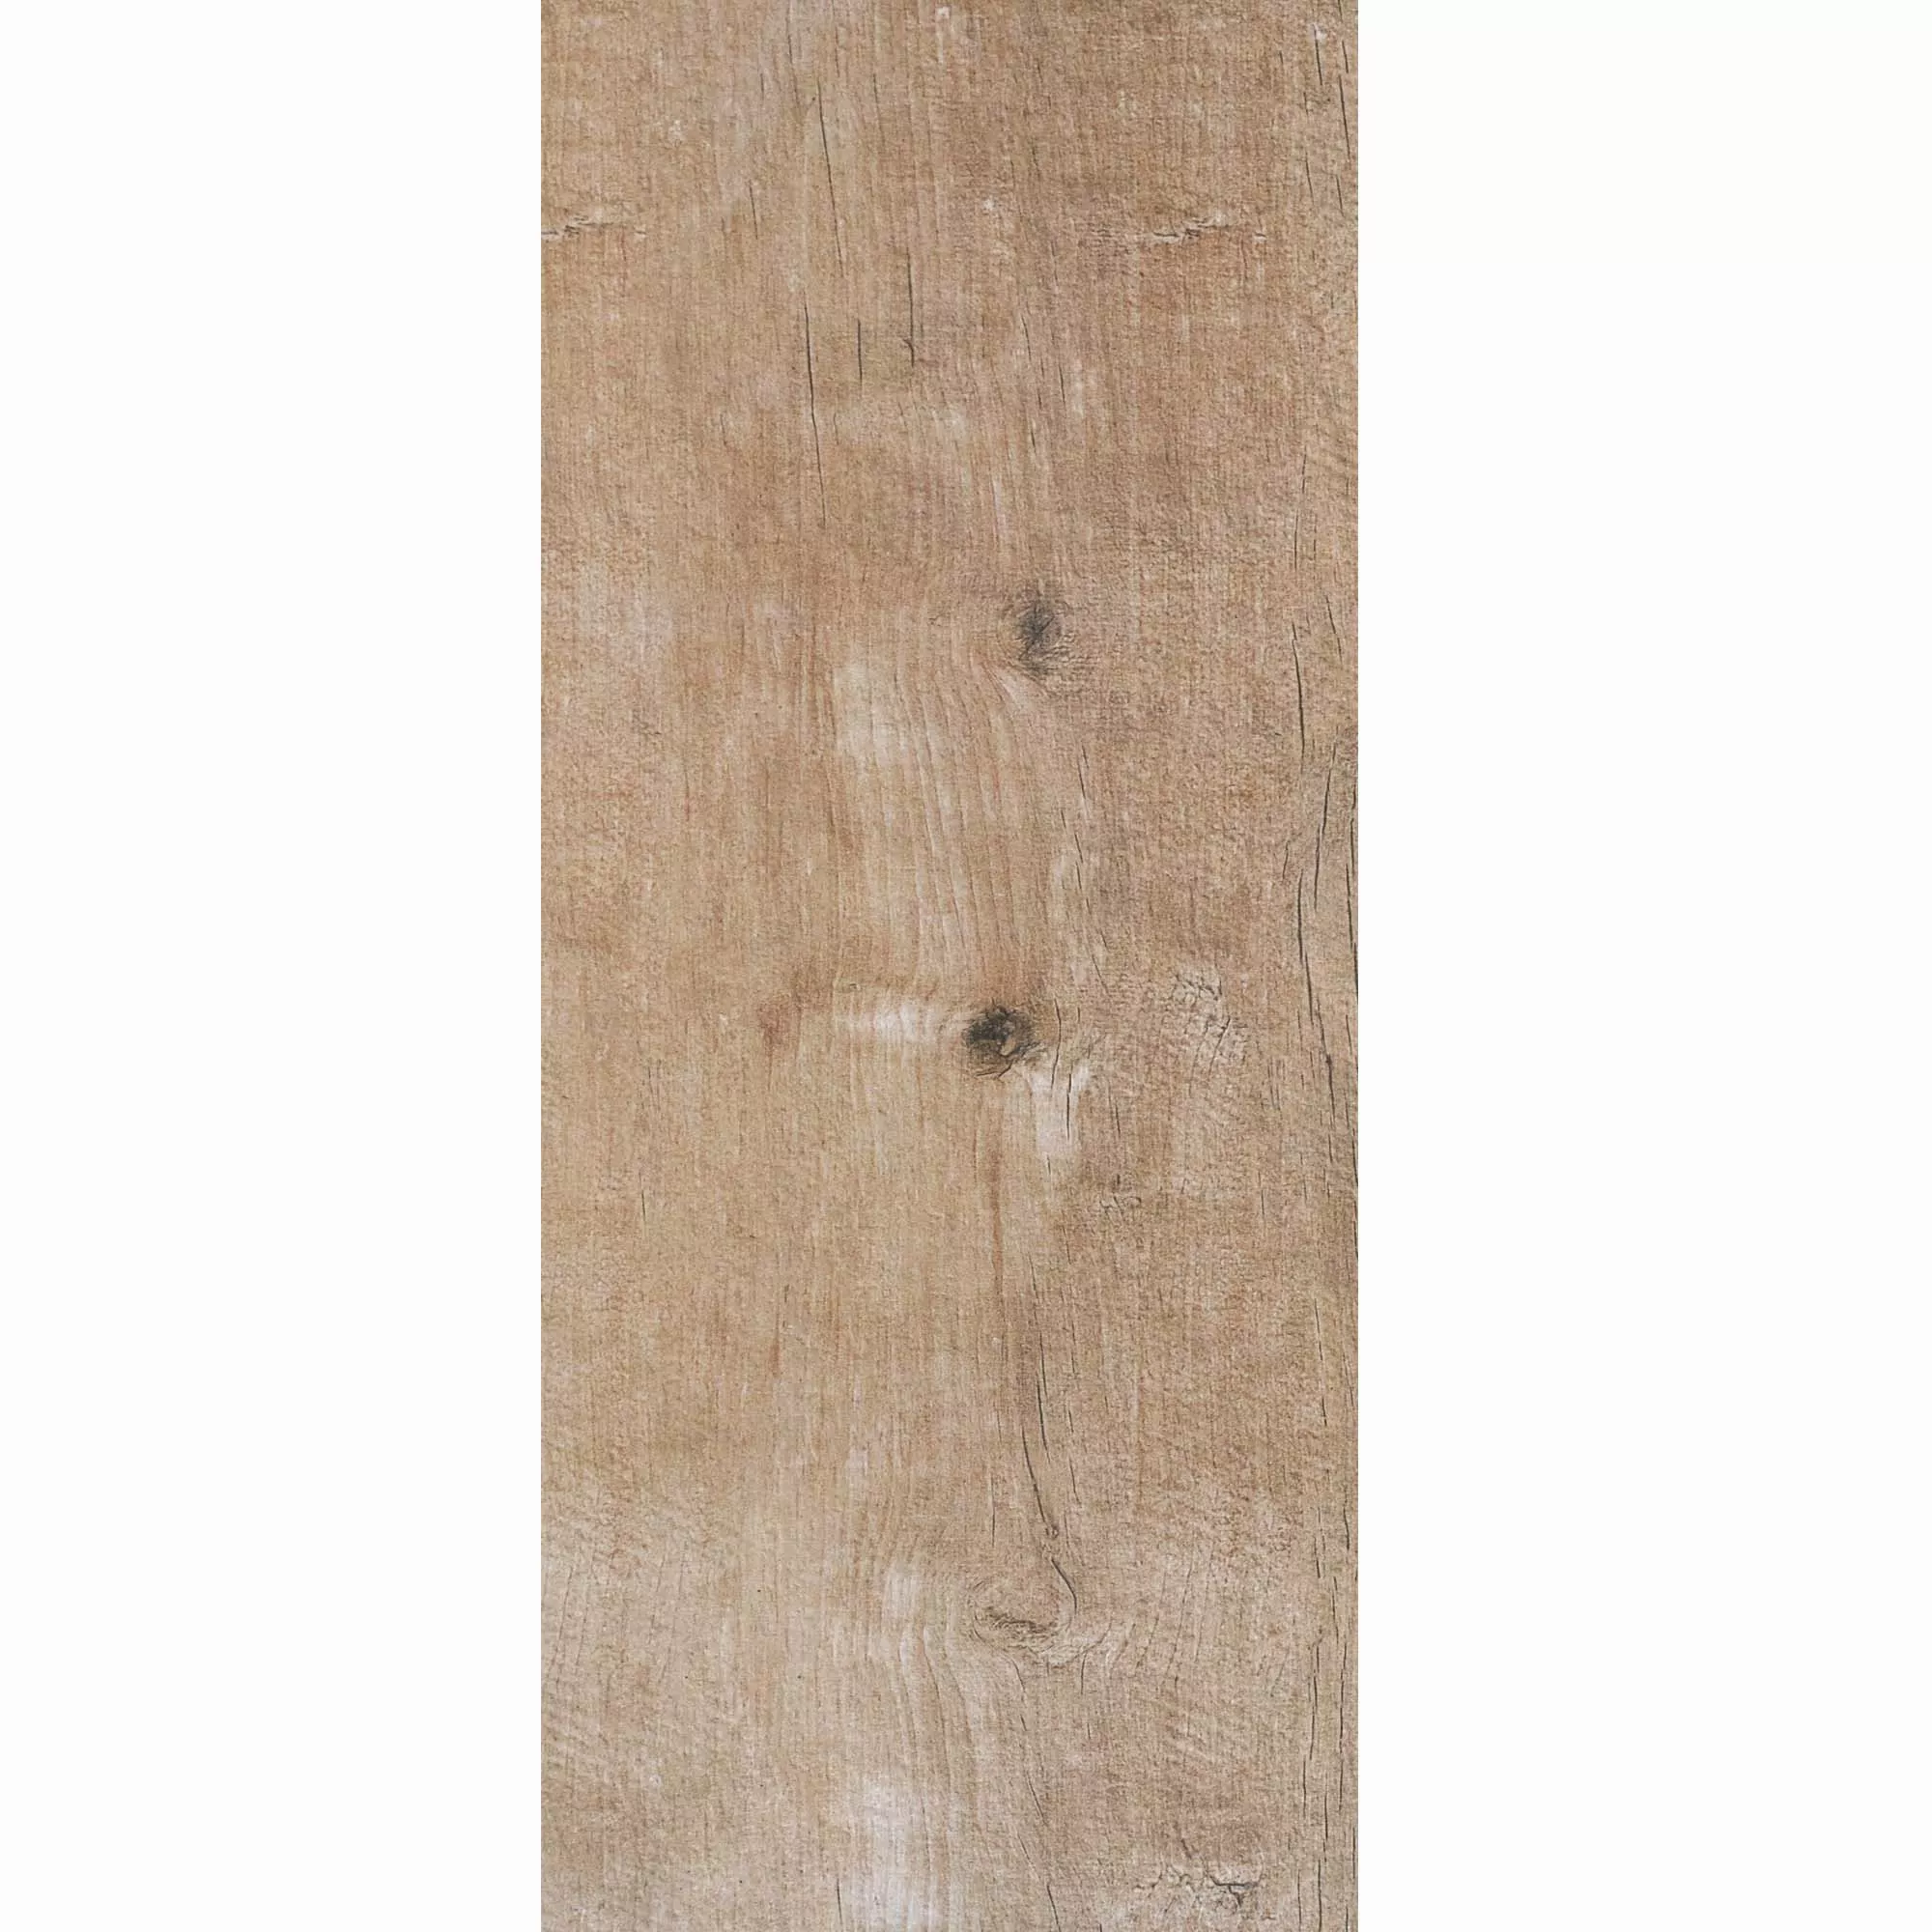 Terrasser Fliser Keystone Imiteret Træ 30x120cm Sandbeige